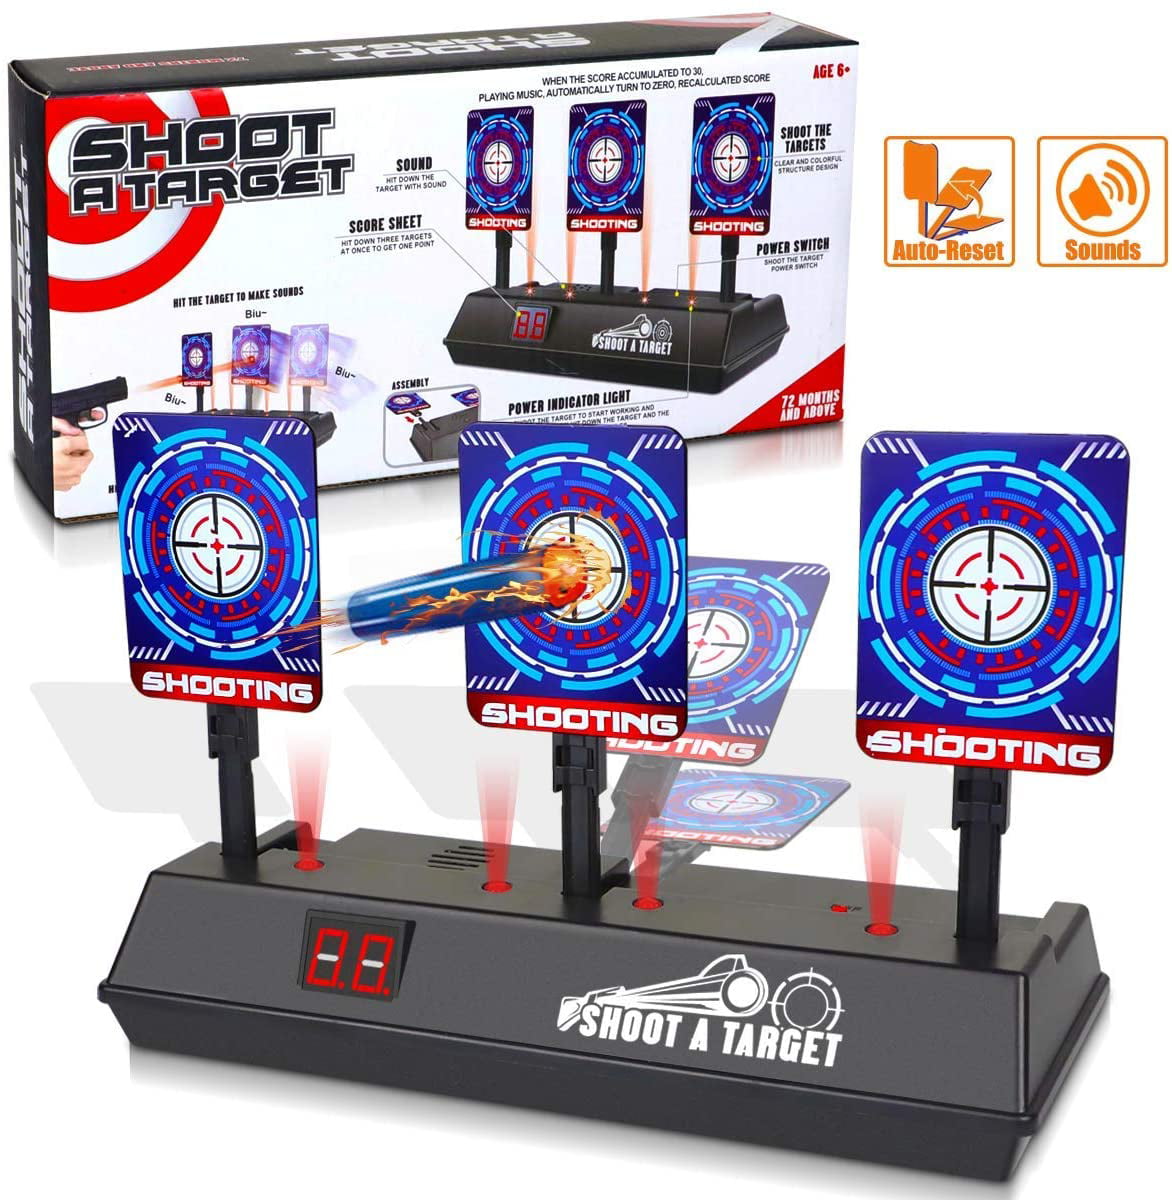 Electric Scoring Auto Reset Shooting Digital Target Nurf Tool Toy Kids Gifts 